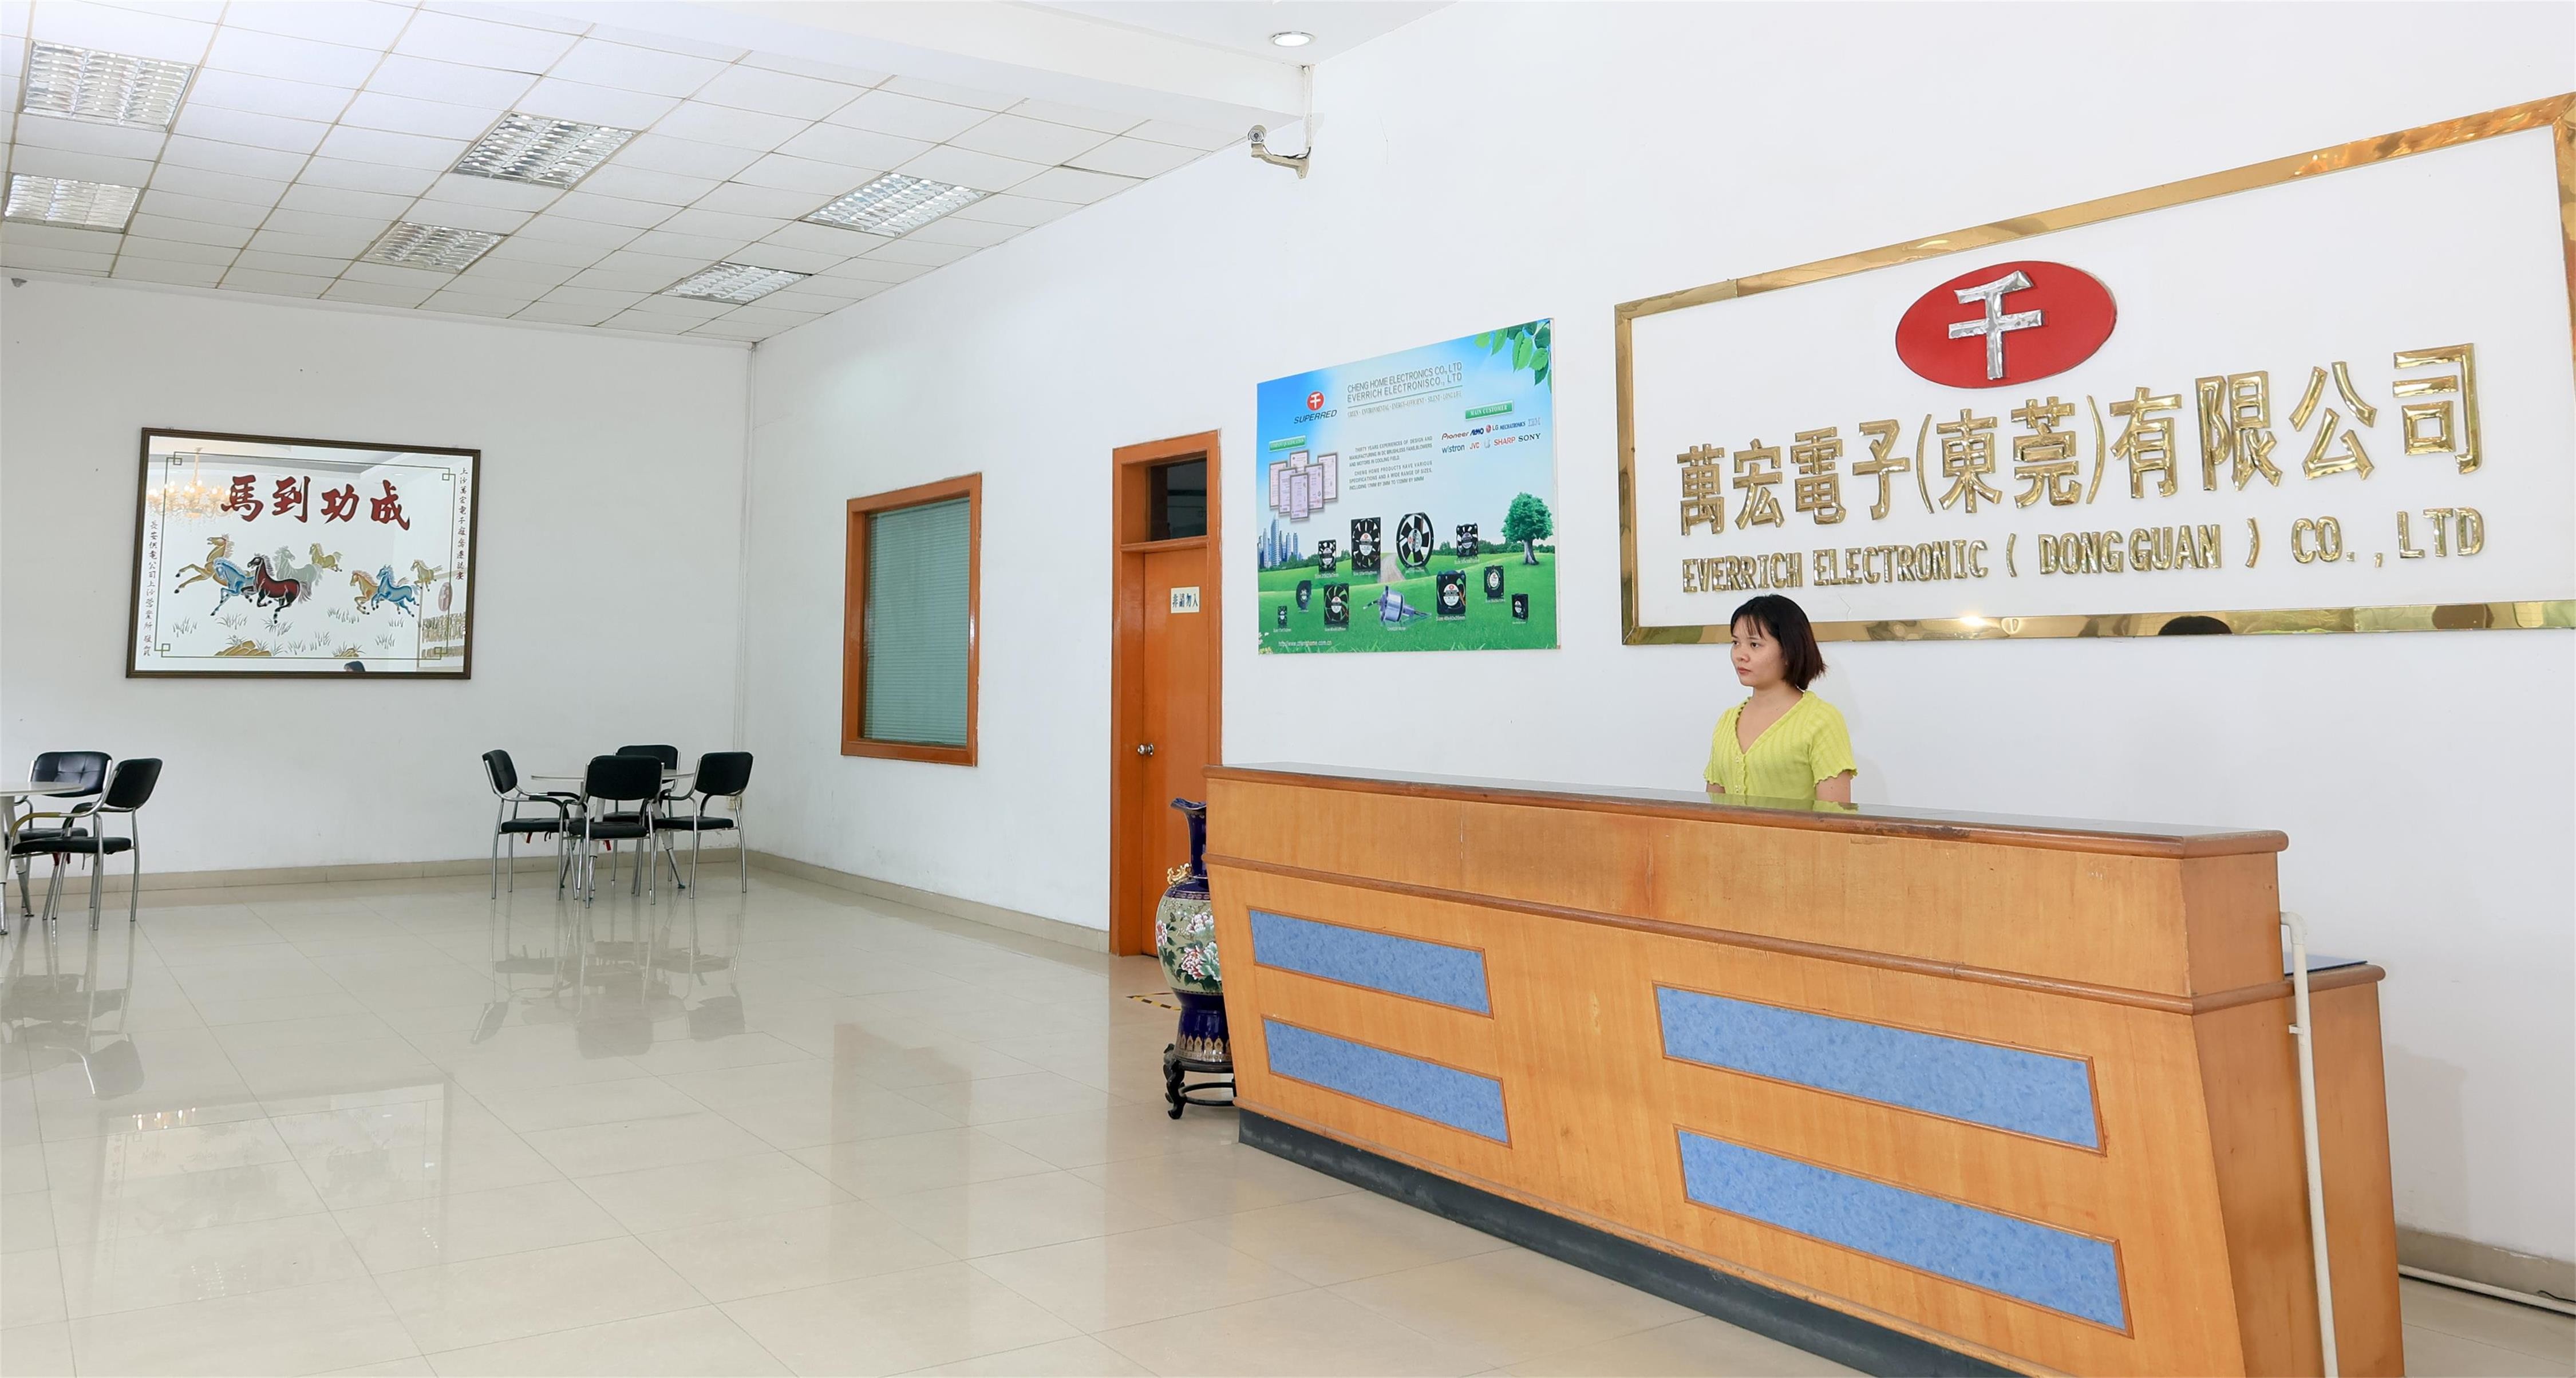 Chiny Cheng Home Electronics Co.,Ltd profil firmy